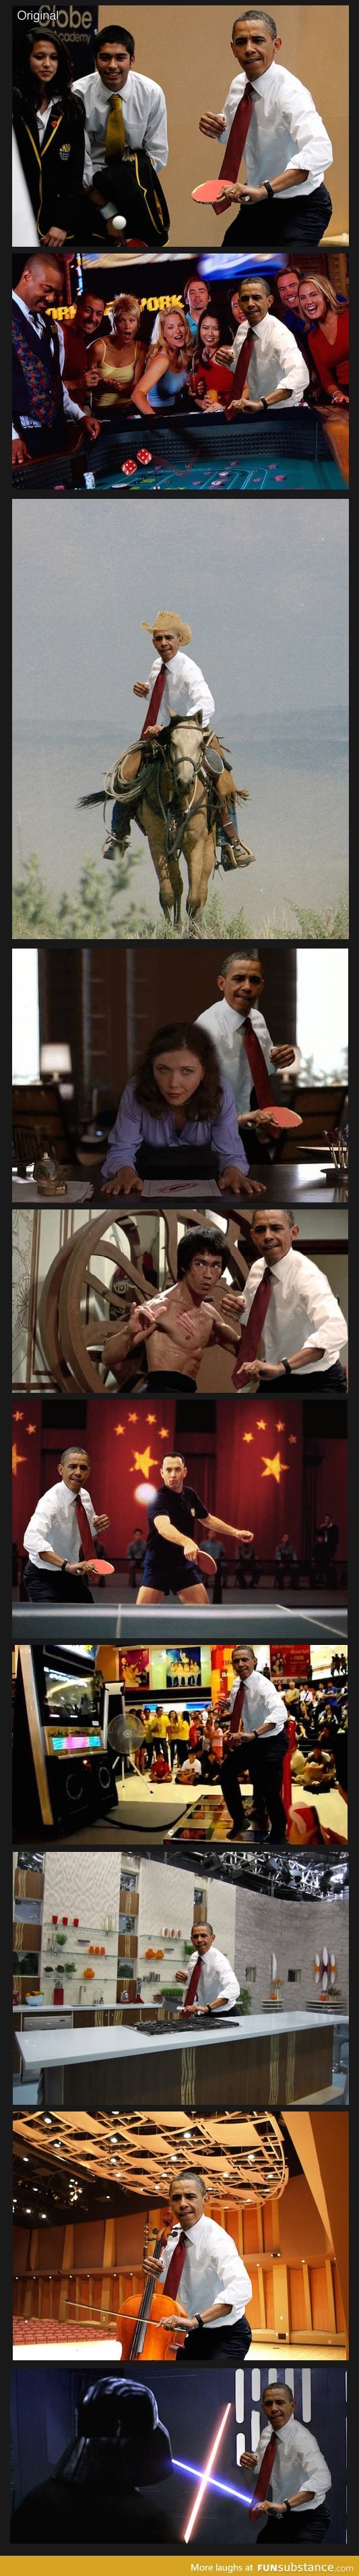 Obama playing ping pong photoshop battle